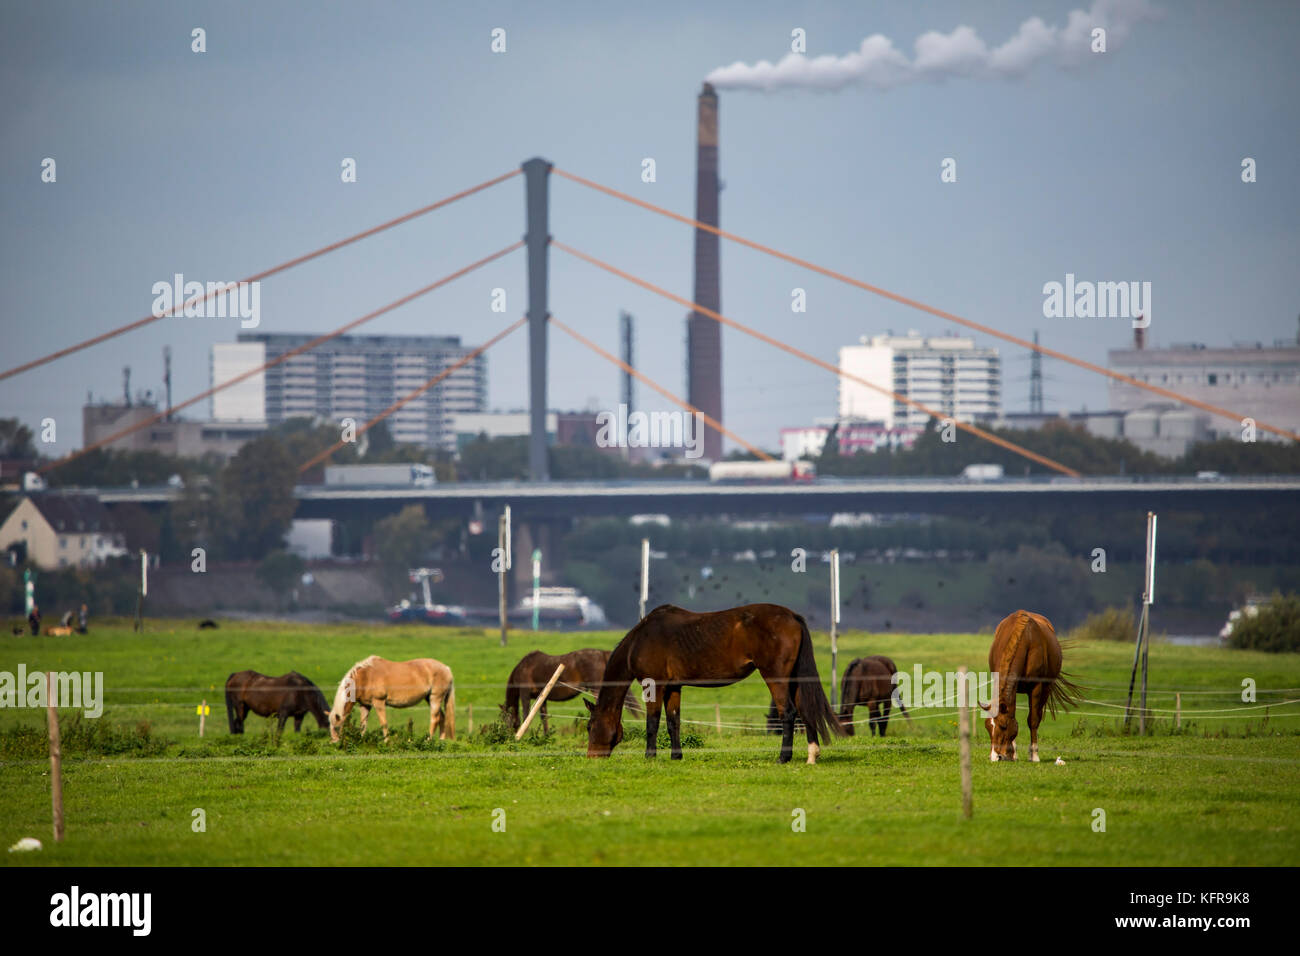 Rhine meadows,in Duisburg Hochemmerich, Germany, Horses, bridge over river Rhine, industry, Stock Photo